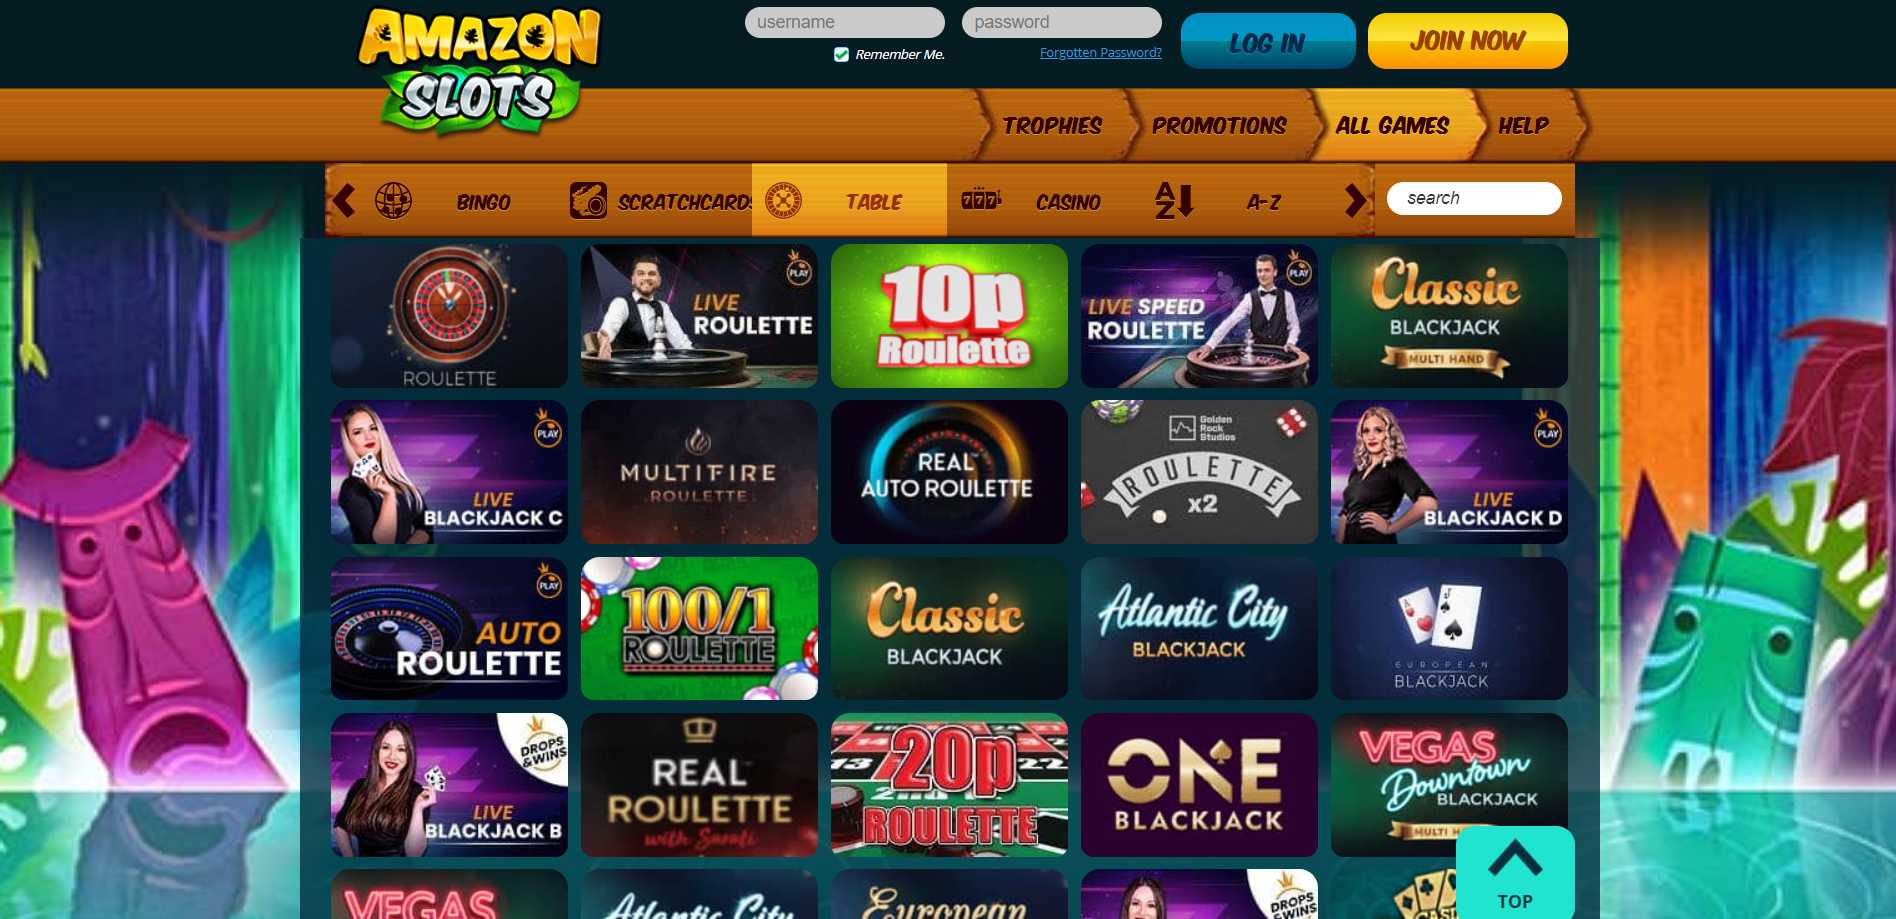 Amazon Slots Live Casino Games